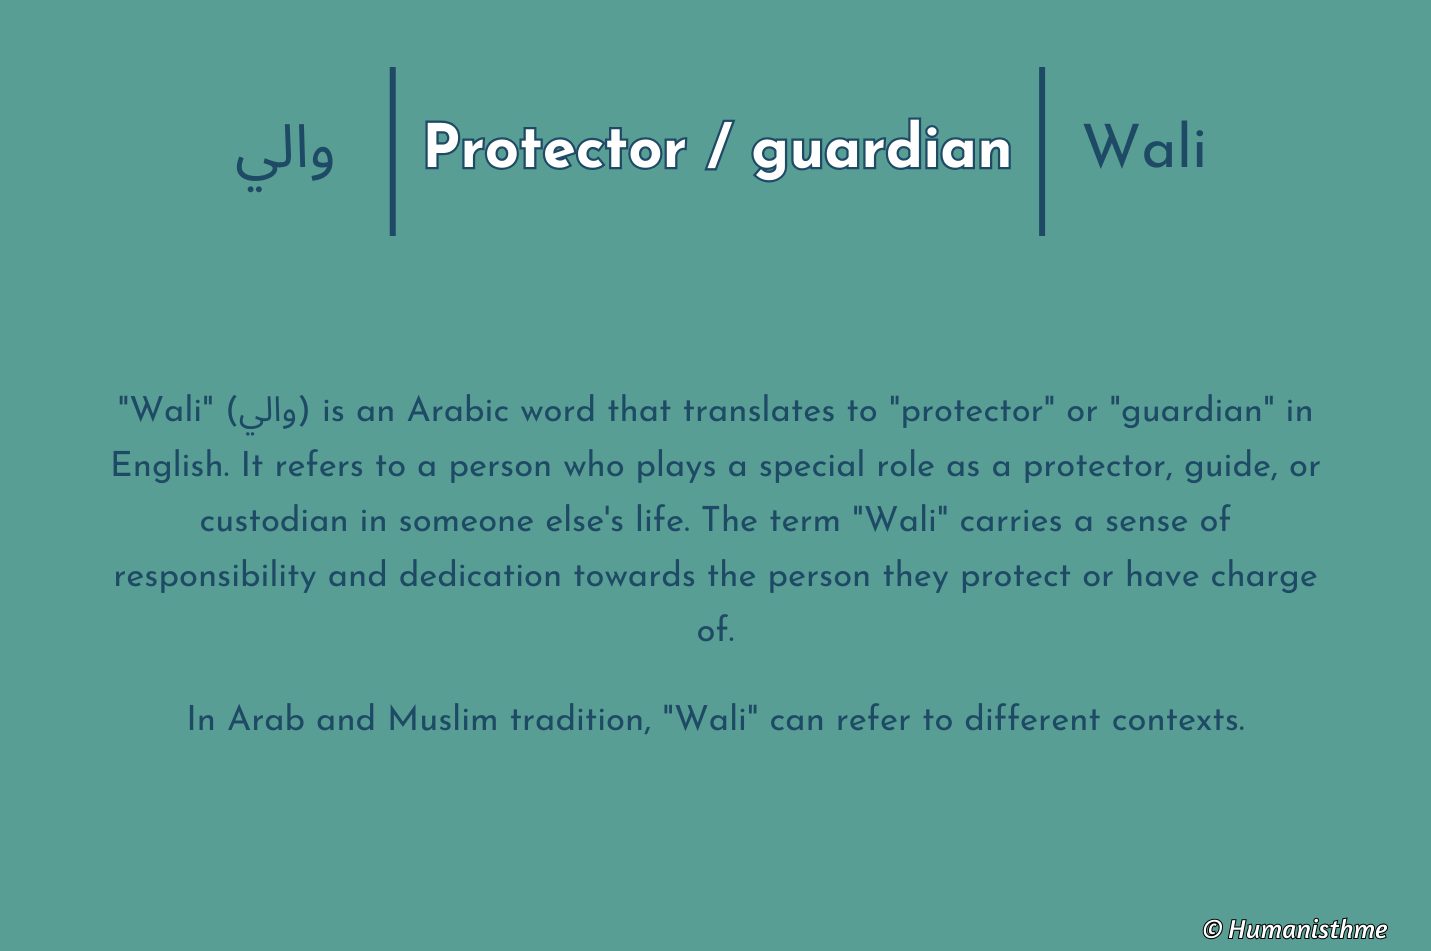 والي | Protecteur / Gardien | Wali